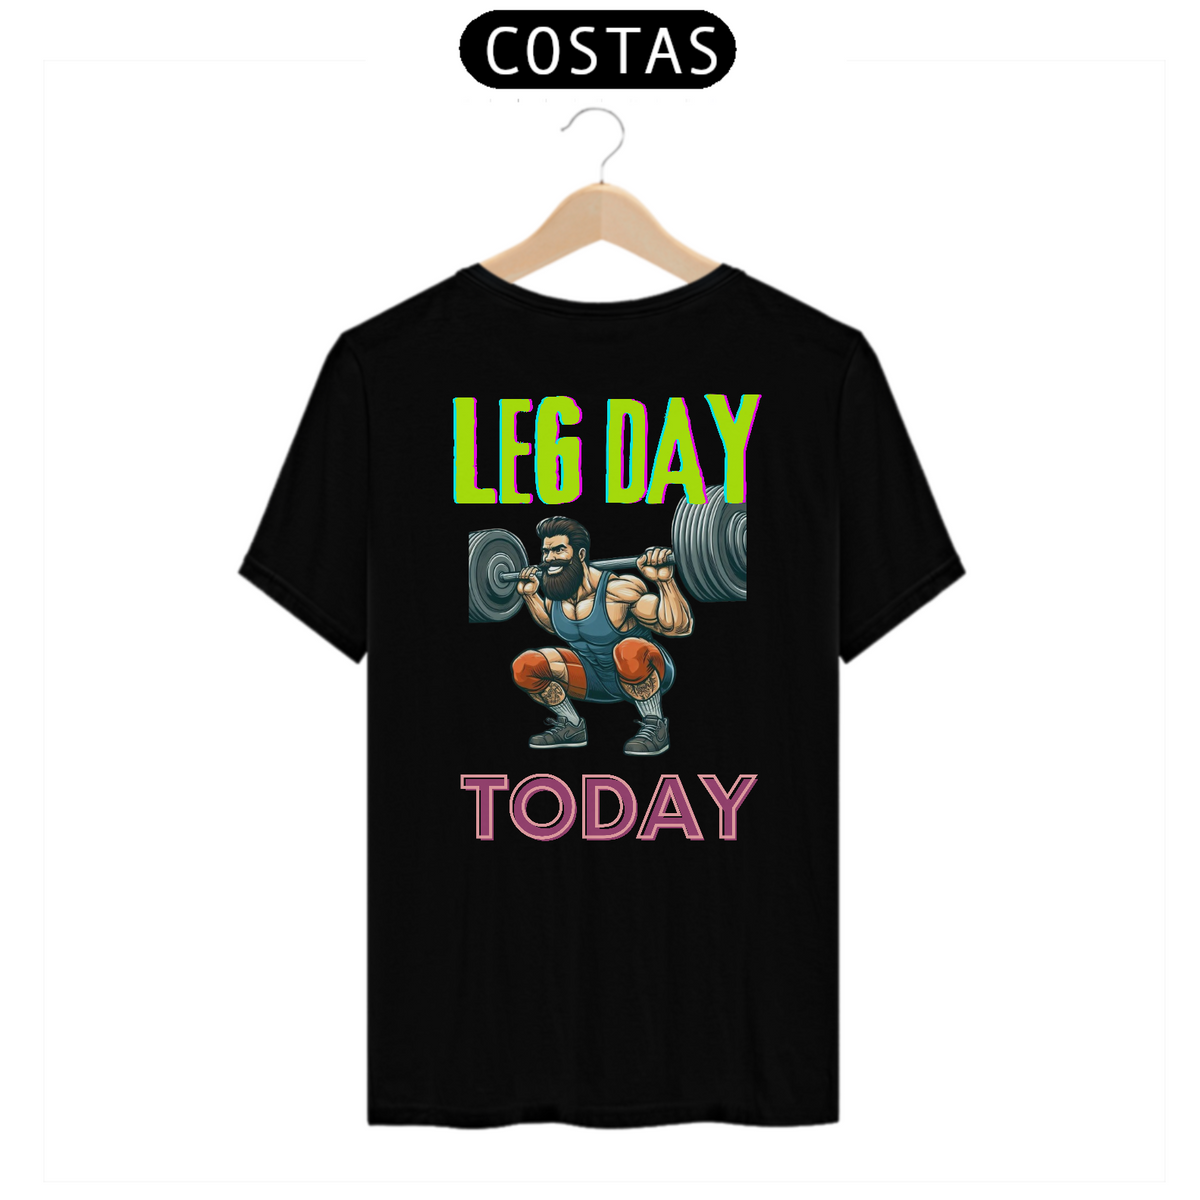 Nome do produto: Camiseta Legday today Classic